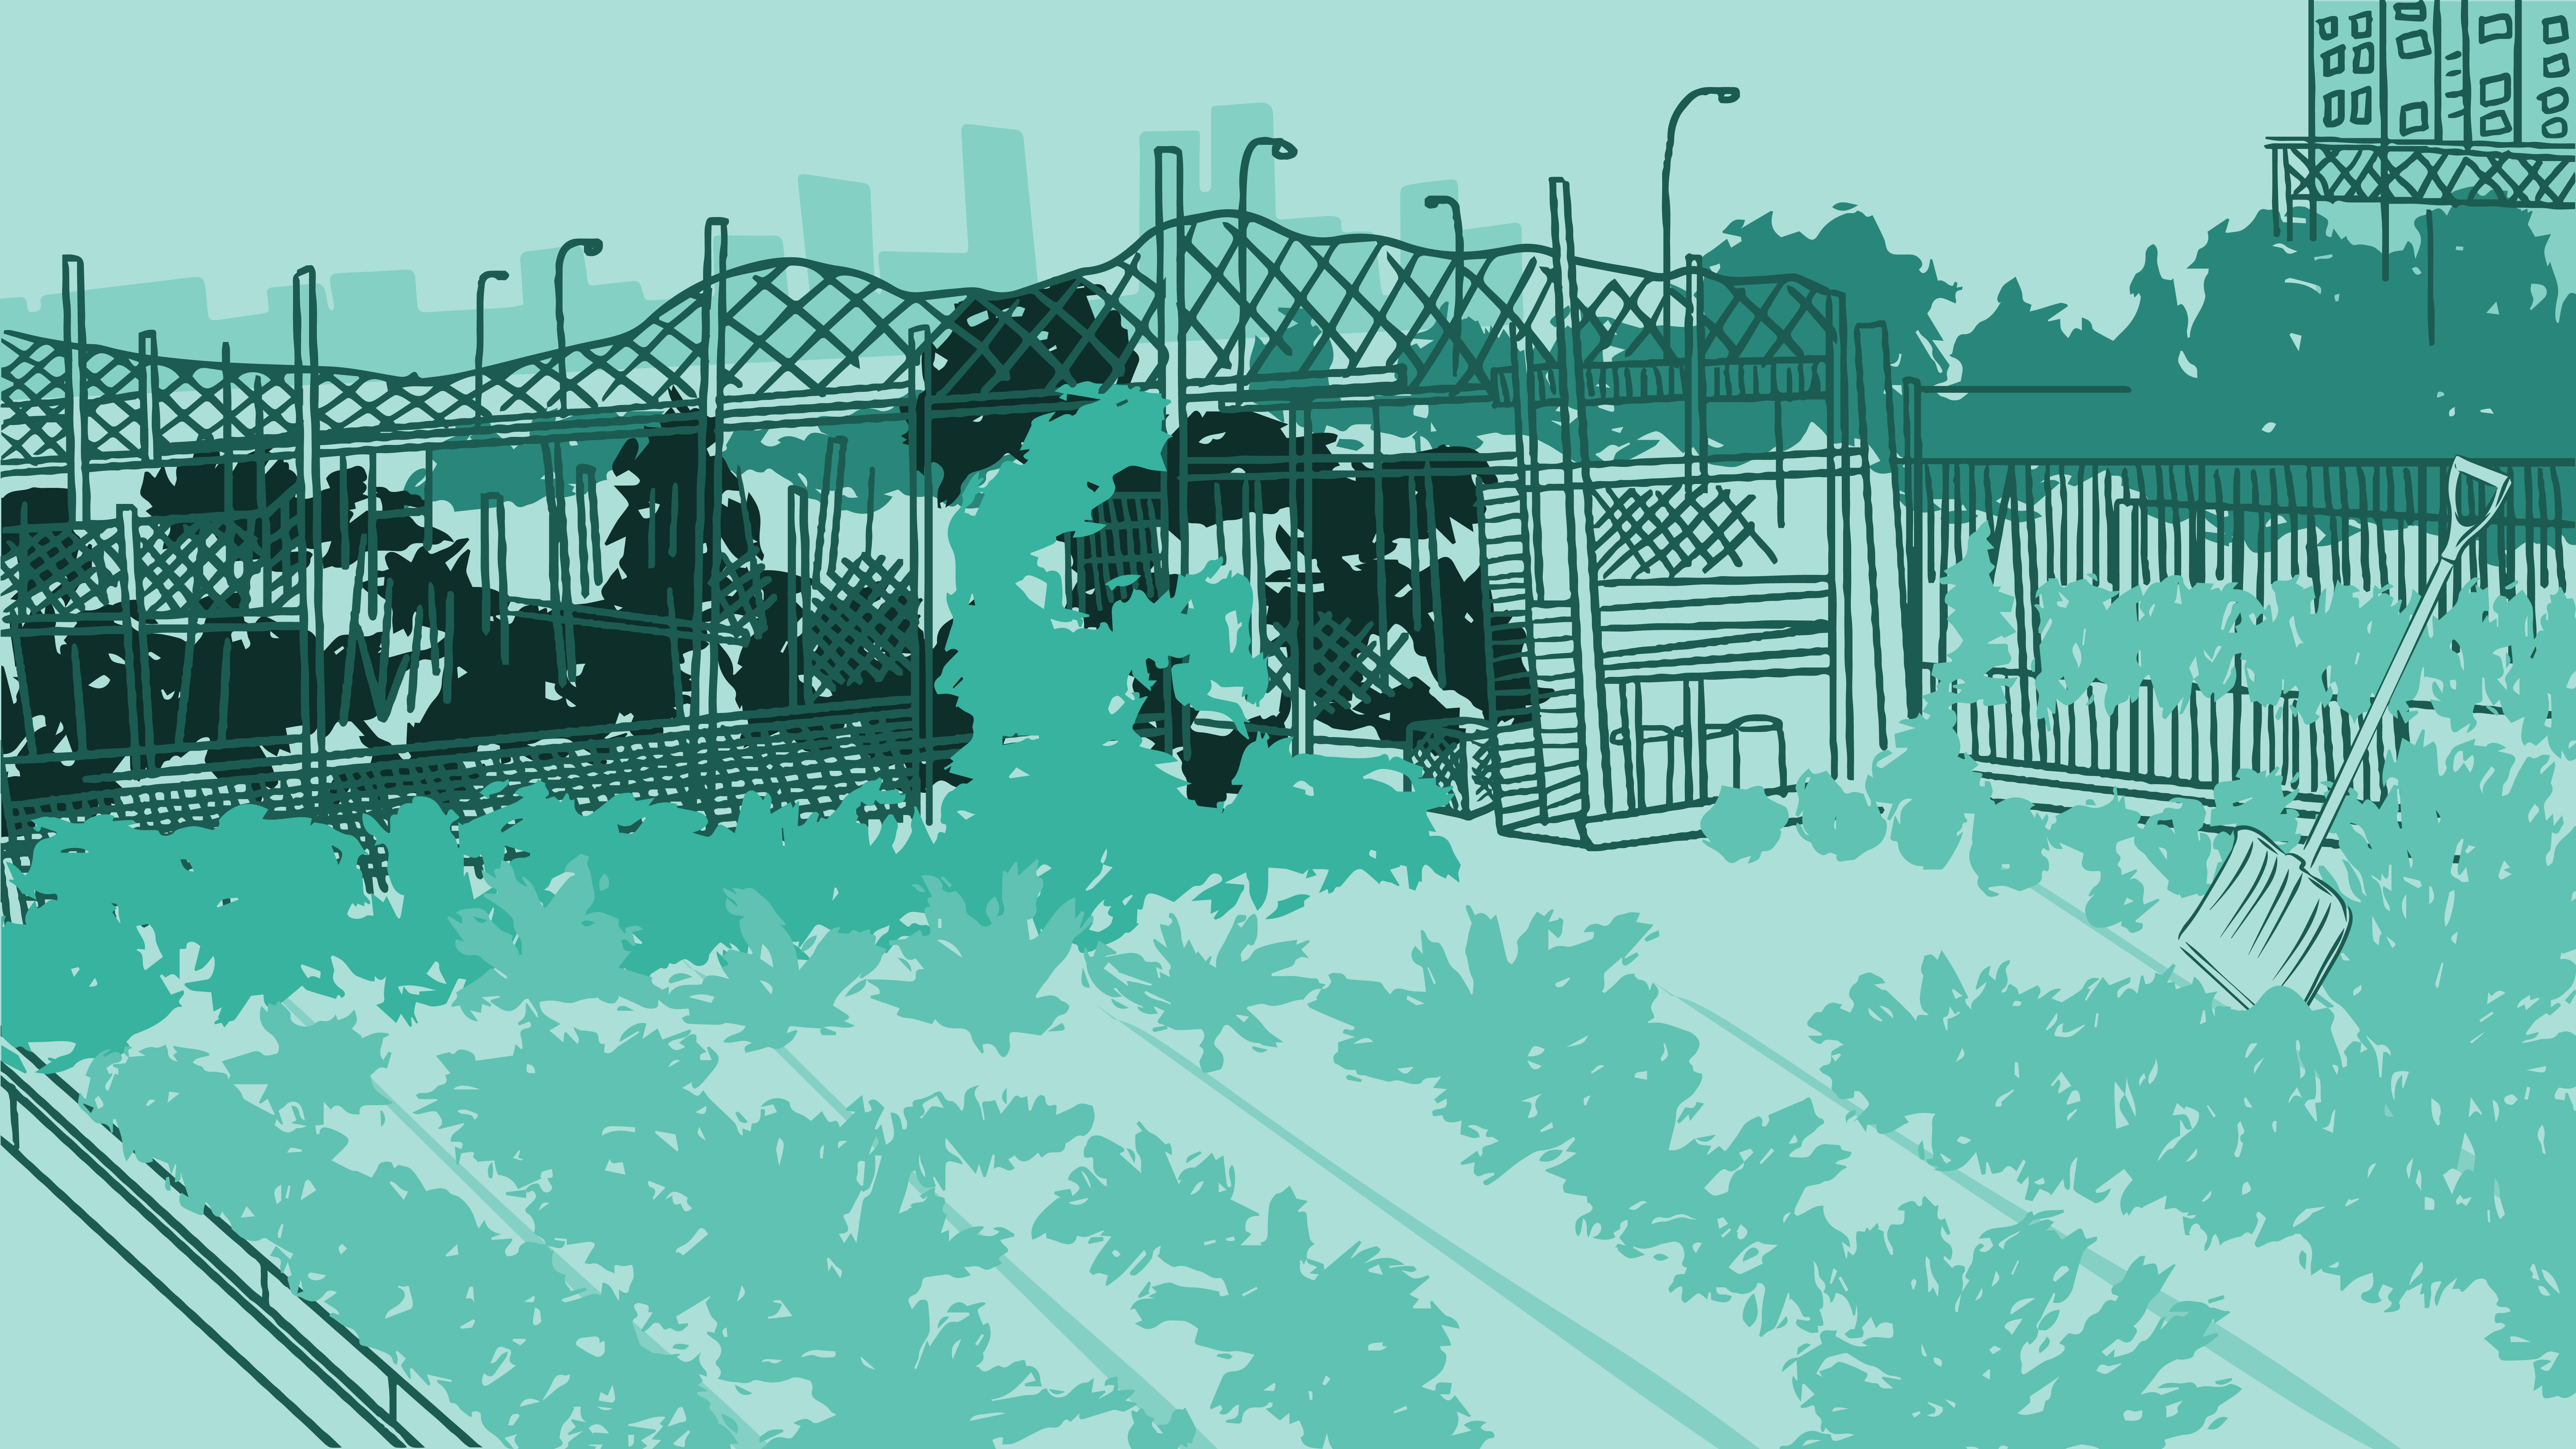 Illustration of an urban community garden in monochromatic green